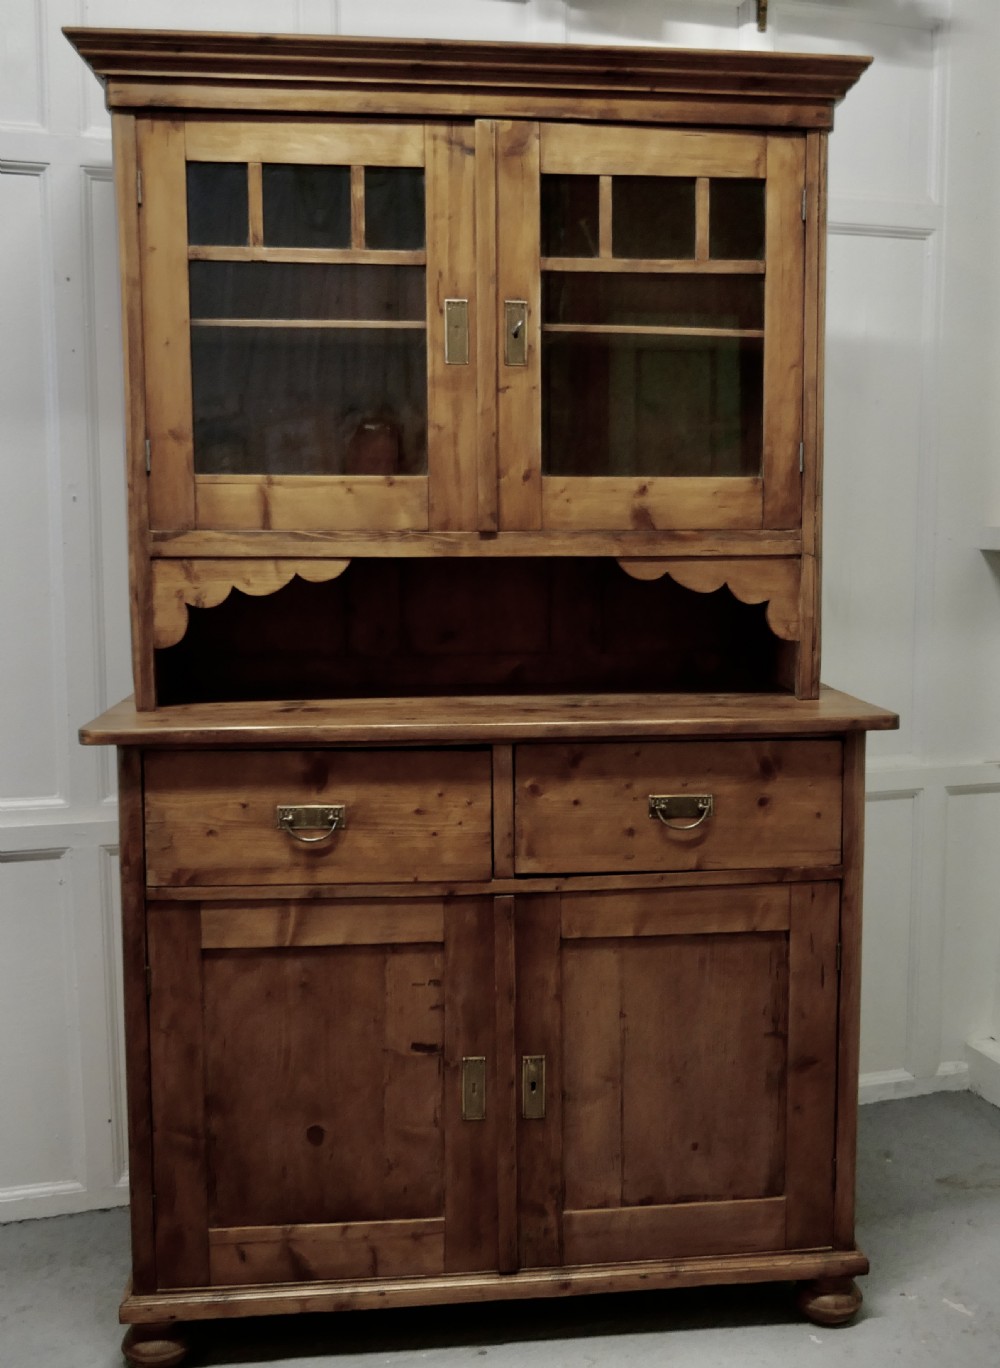 19th century french pine farmhouse kitchen glazed dresser